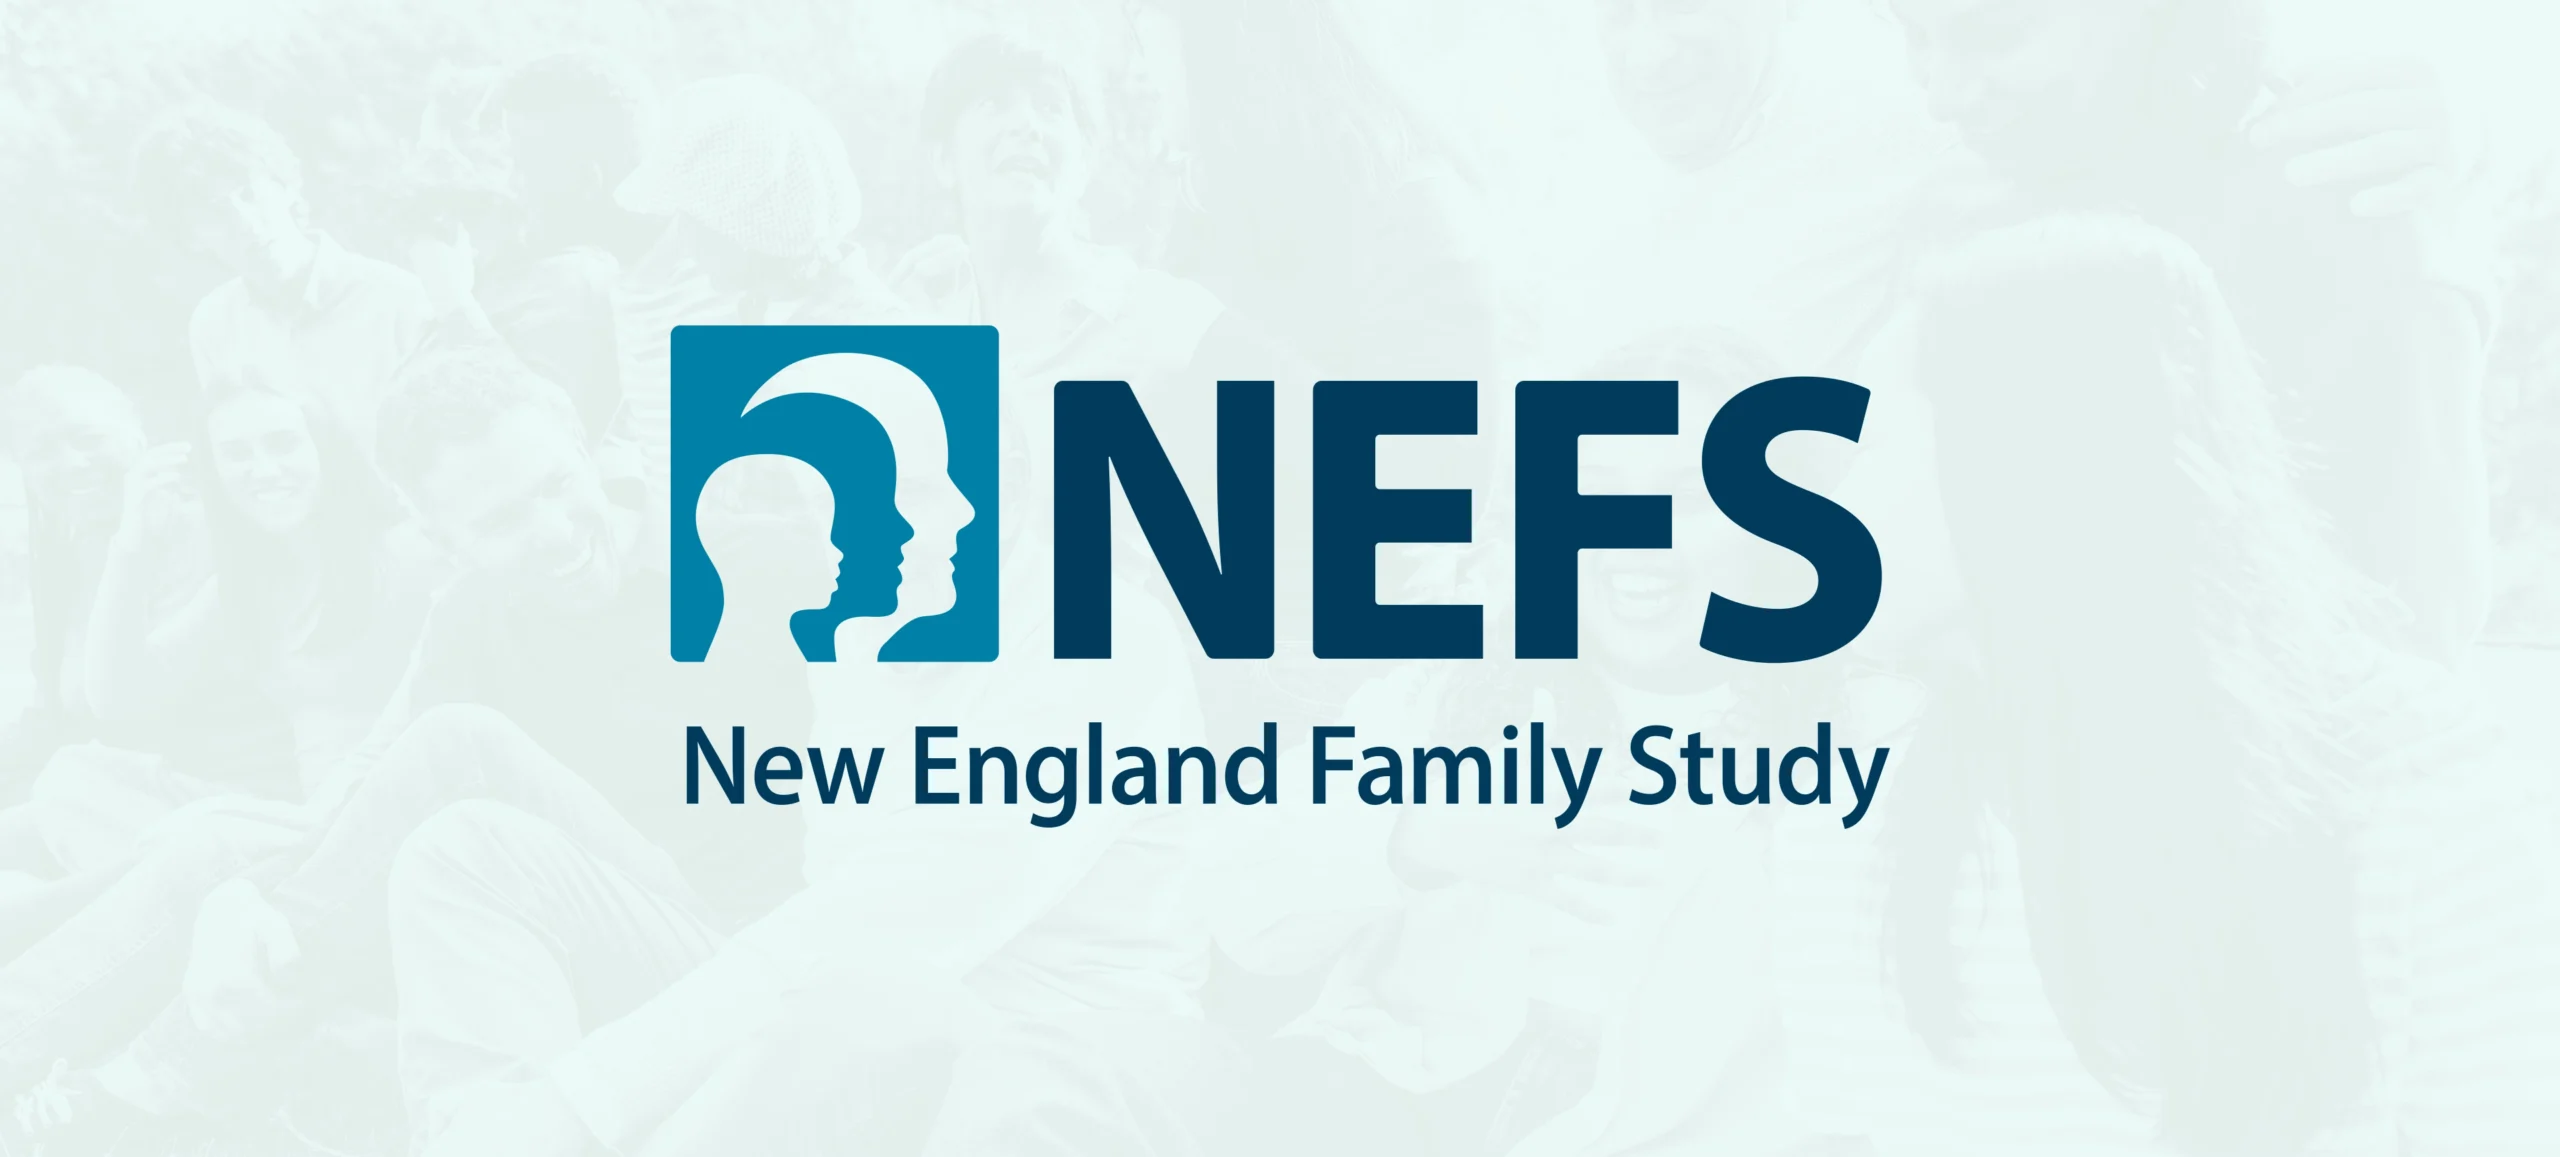 New England Family Study